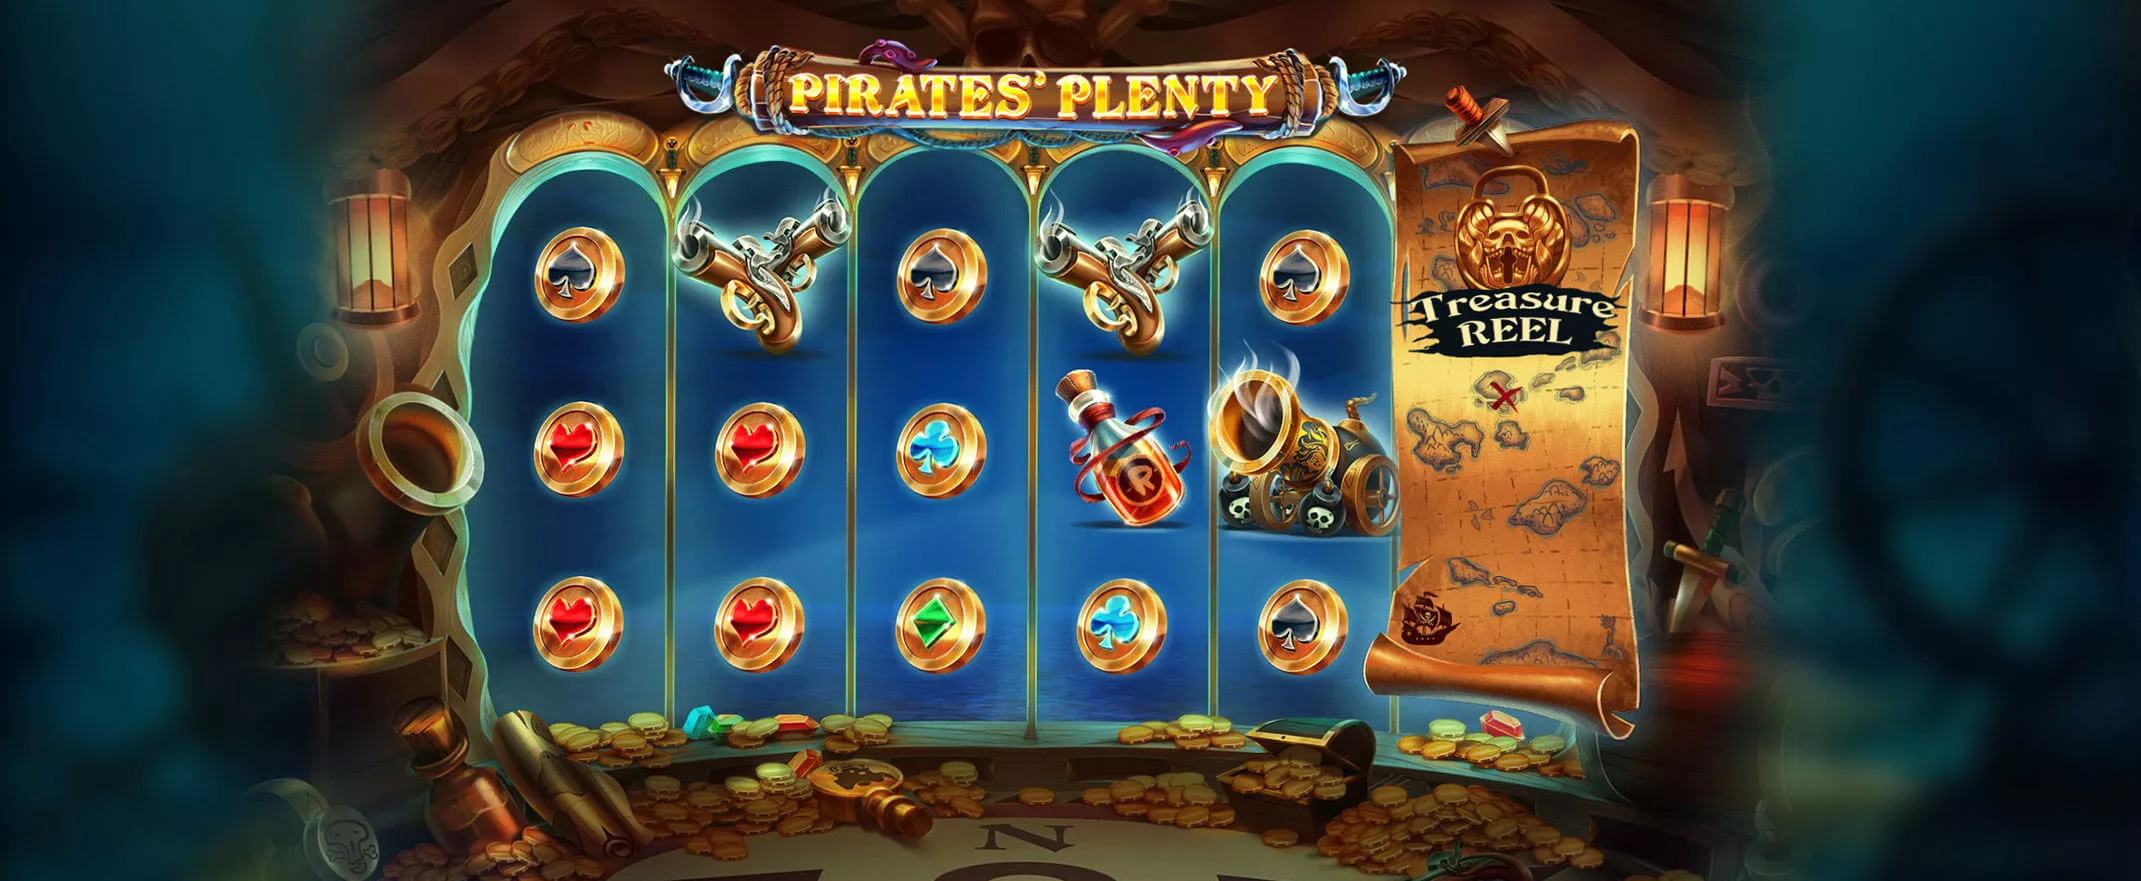 Pirate's Plenty slot review